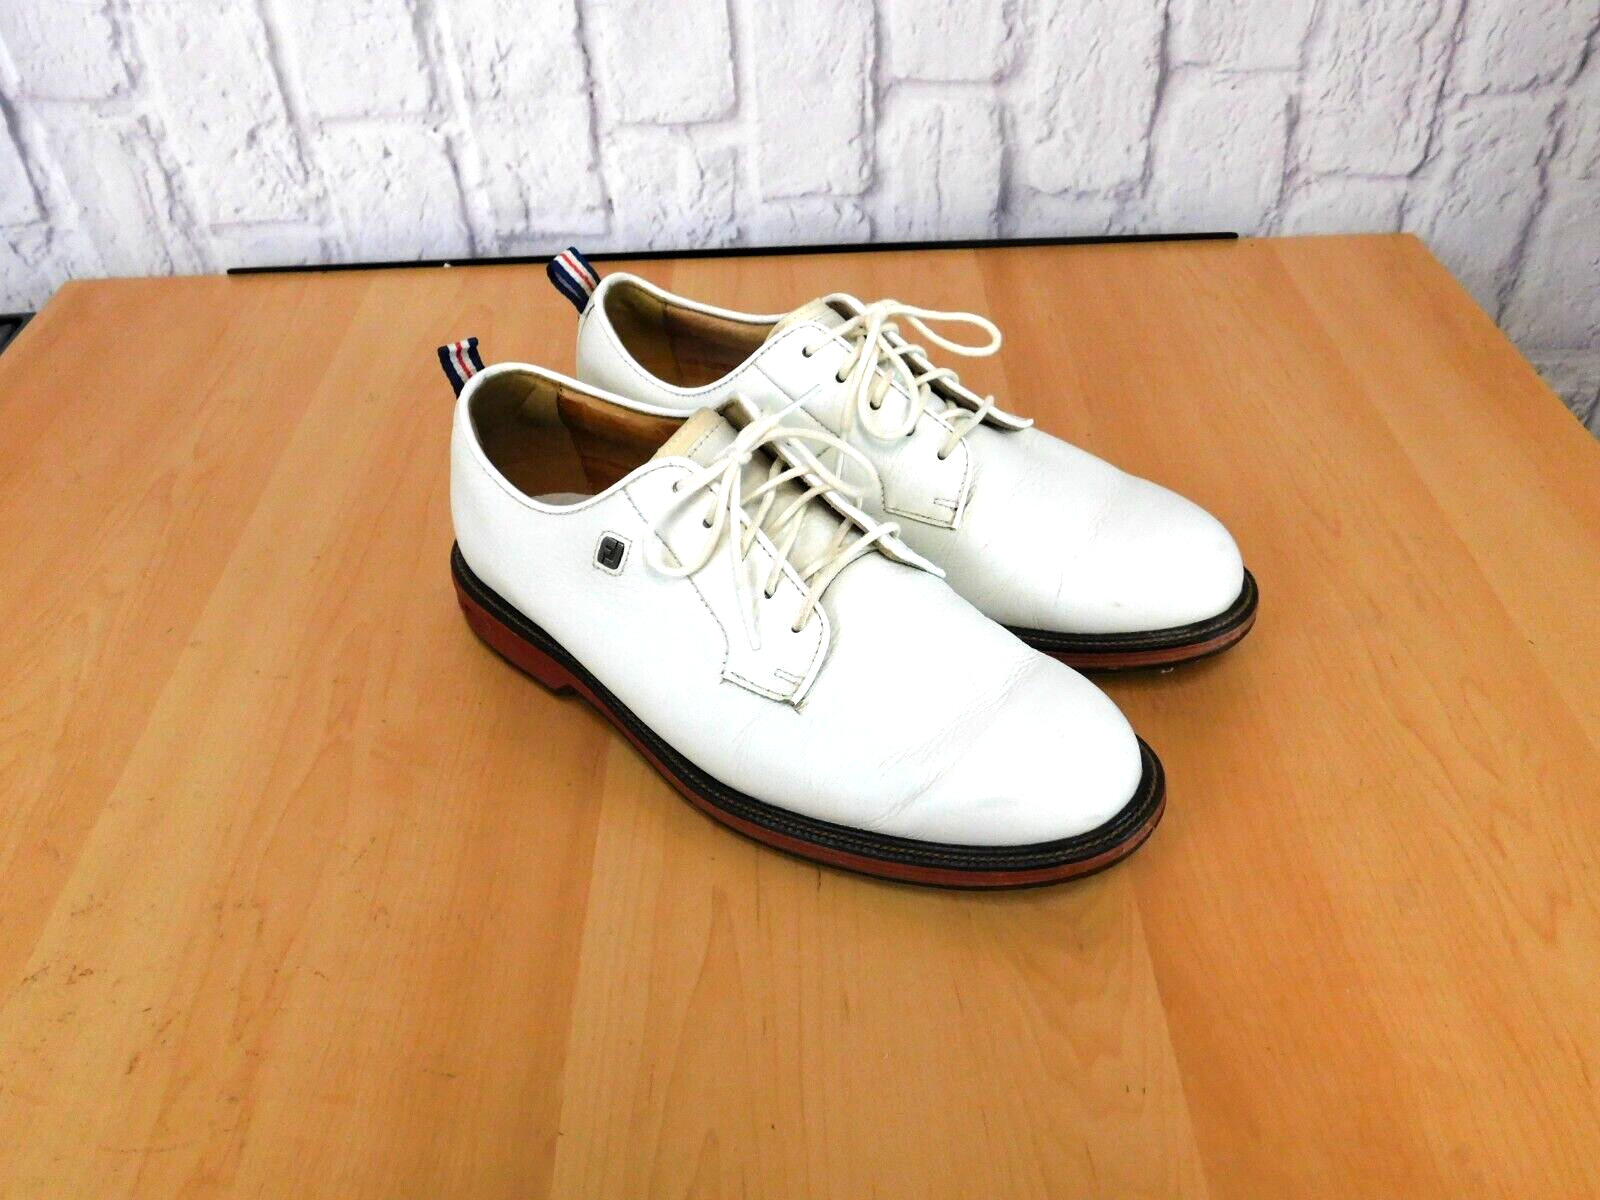 FootJoy Dryjoys Premiere Series Field Golf Shoes Size 8 - White/Brick 53989